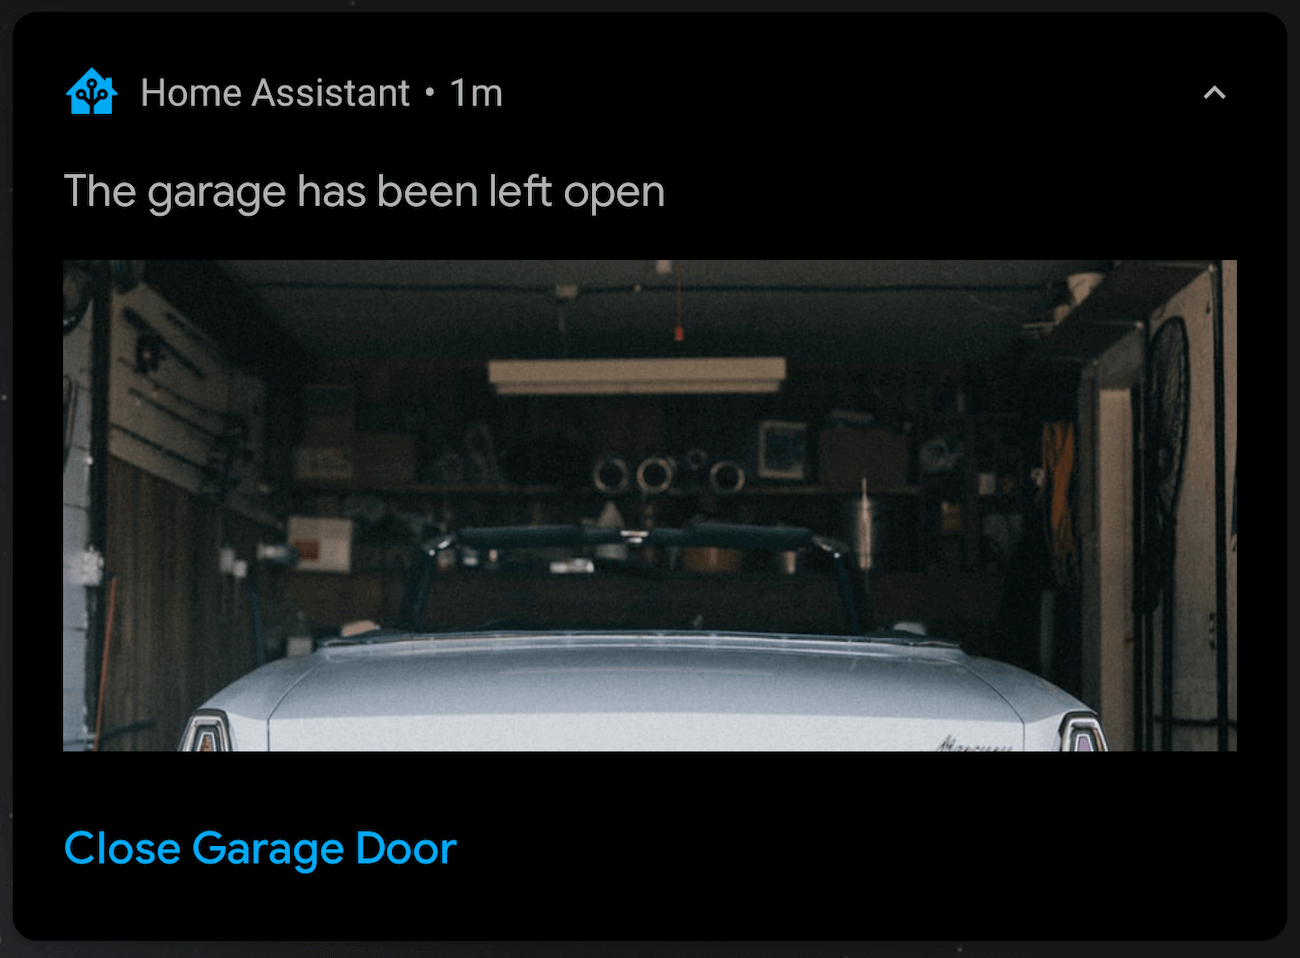 A notification showing an open garage